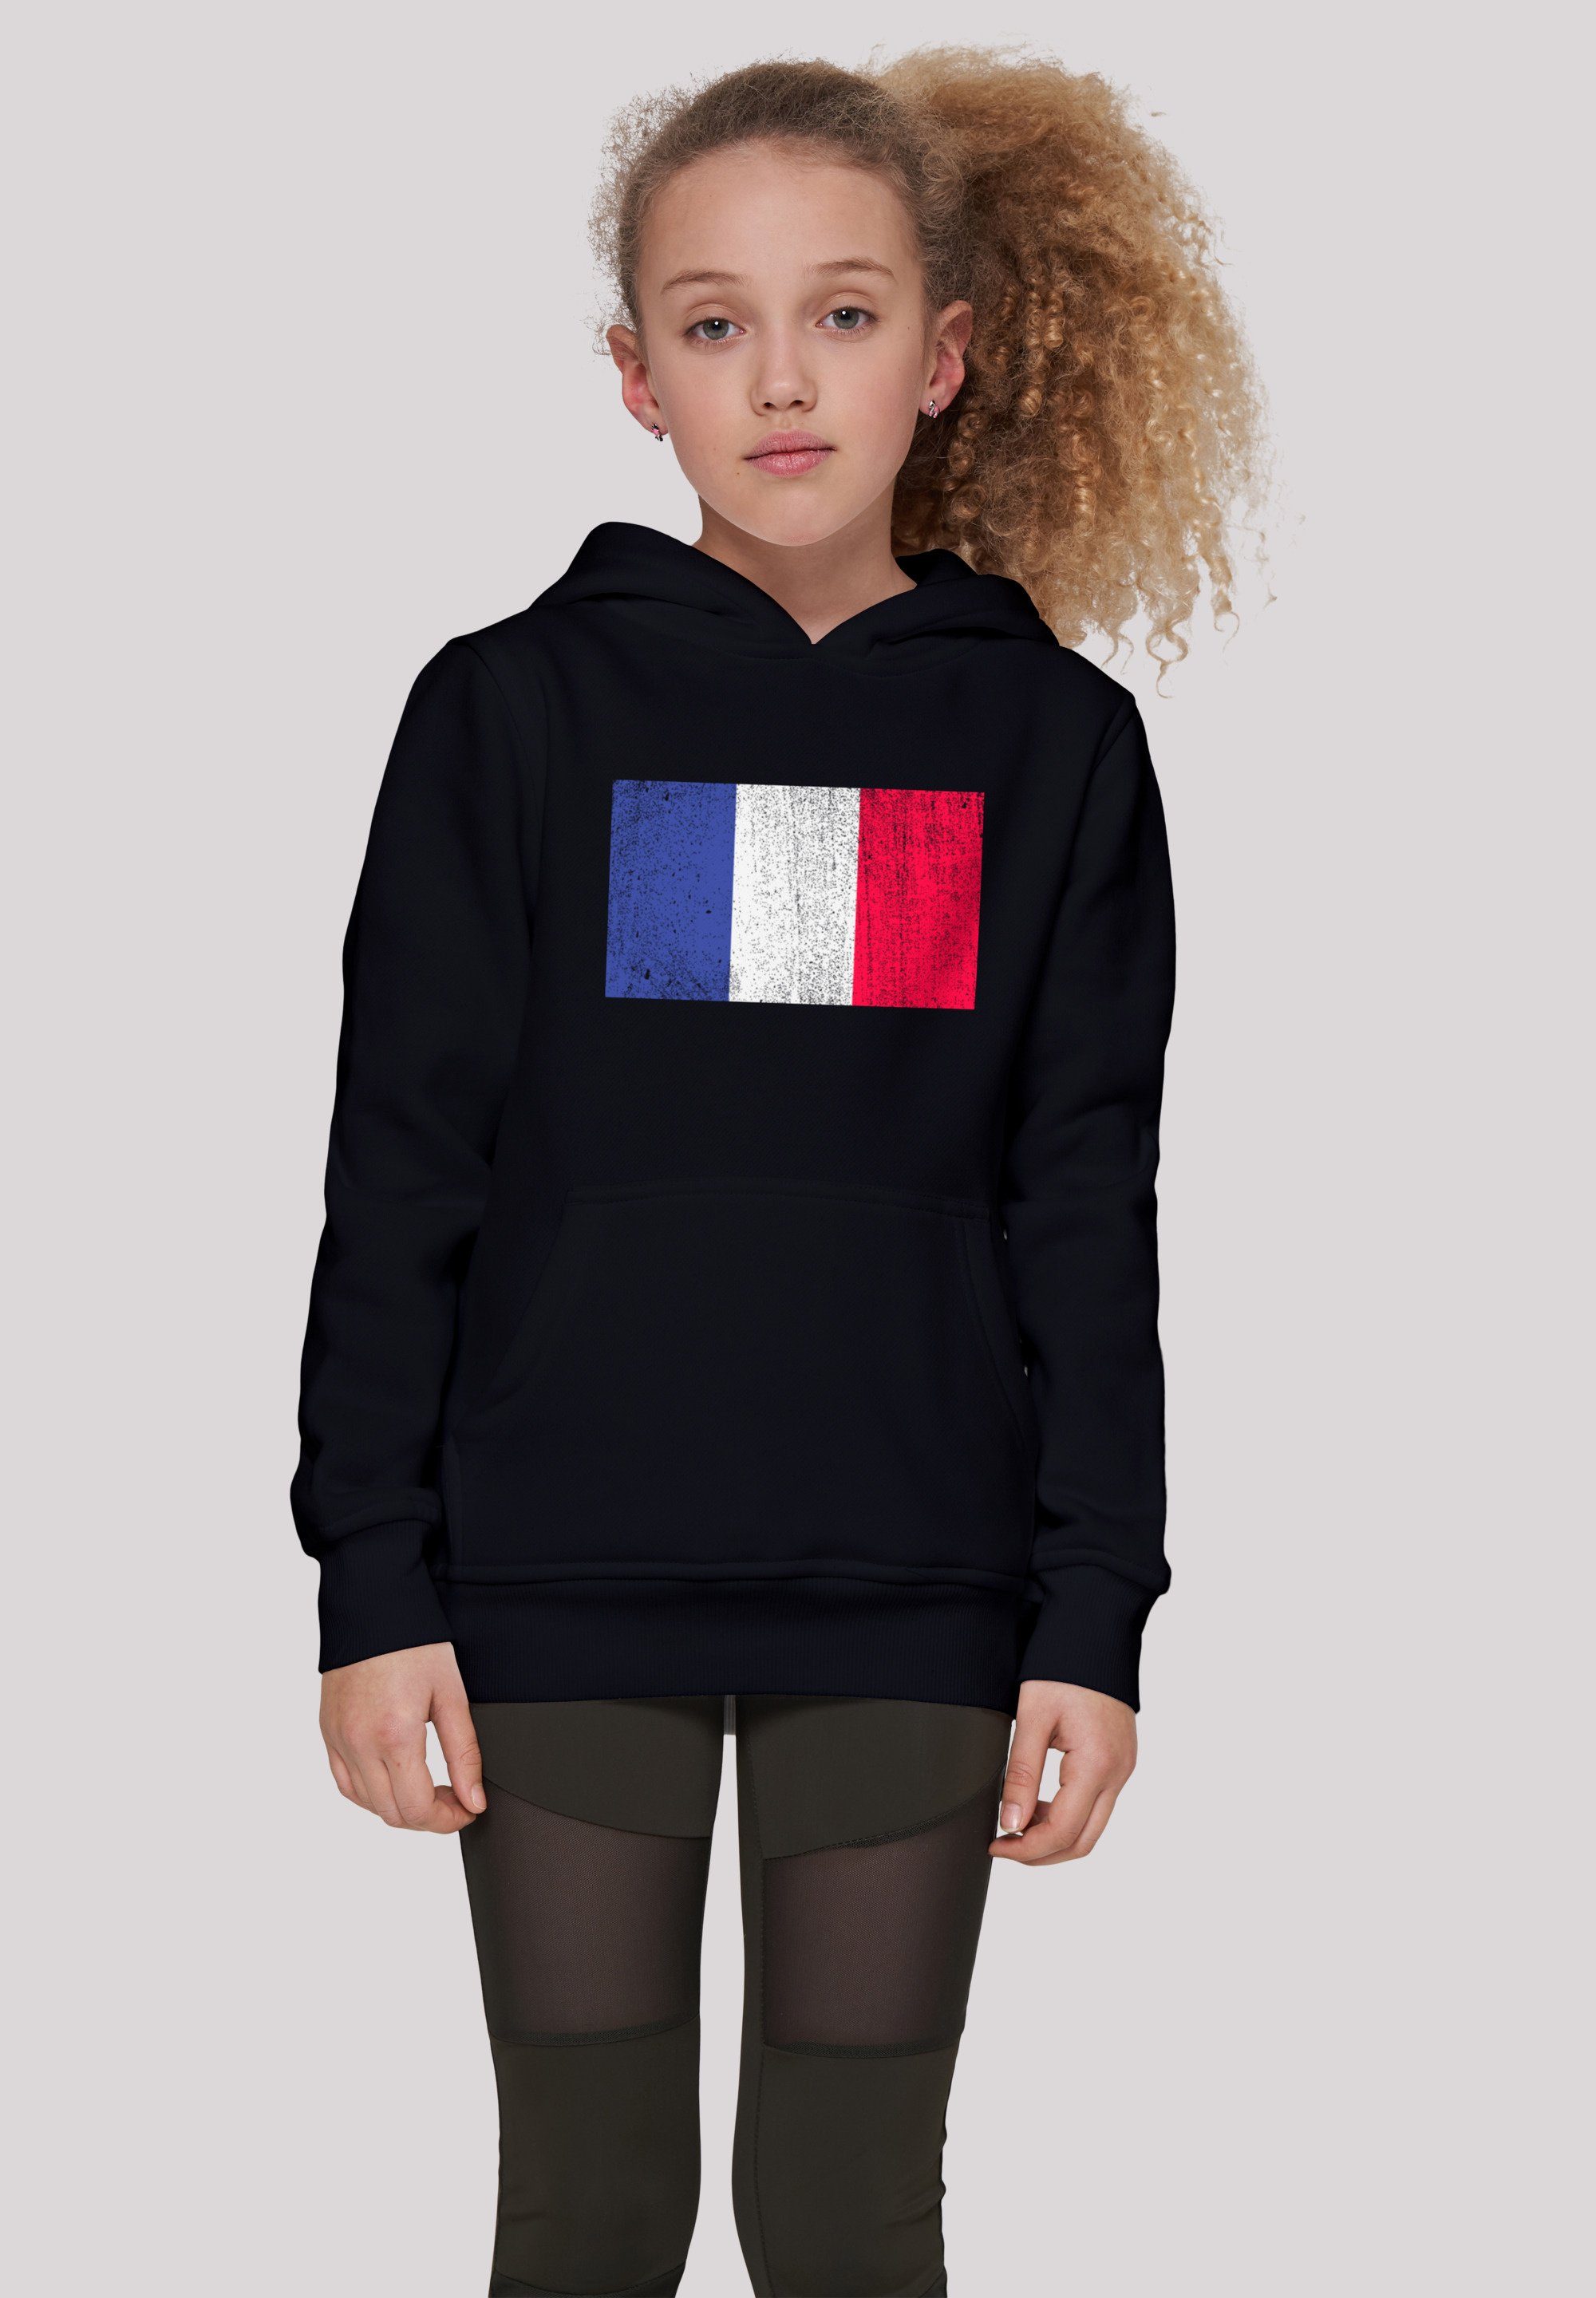 Das F4NT4STIC Kapuzenpullover trägt Print, ist Model distressed Flagge 145 Frankreich groß 145/152 und Größe cm France